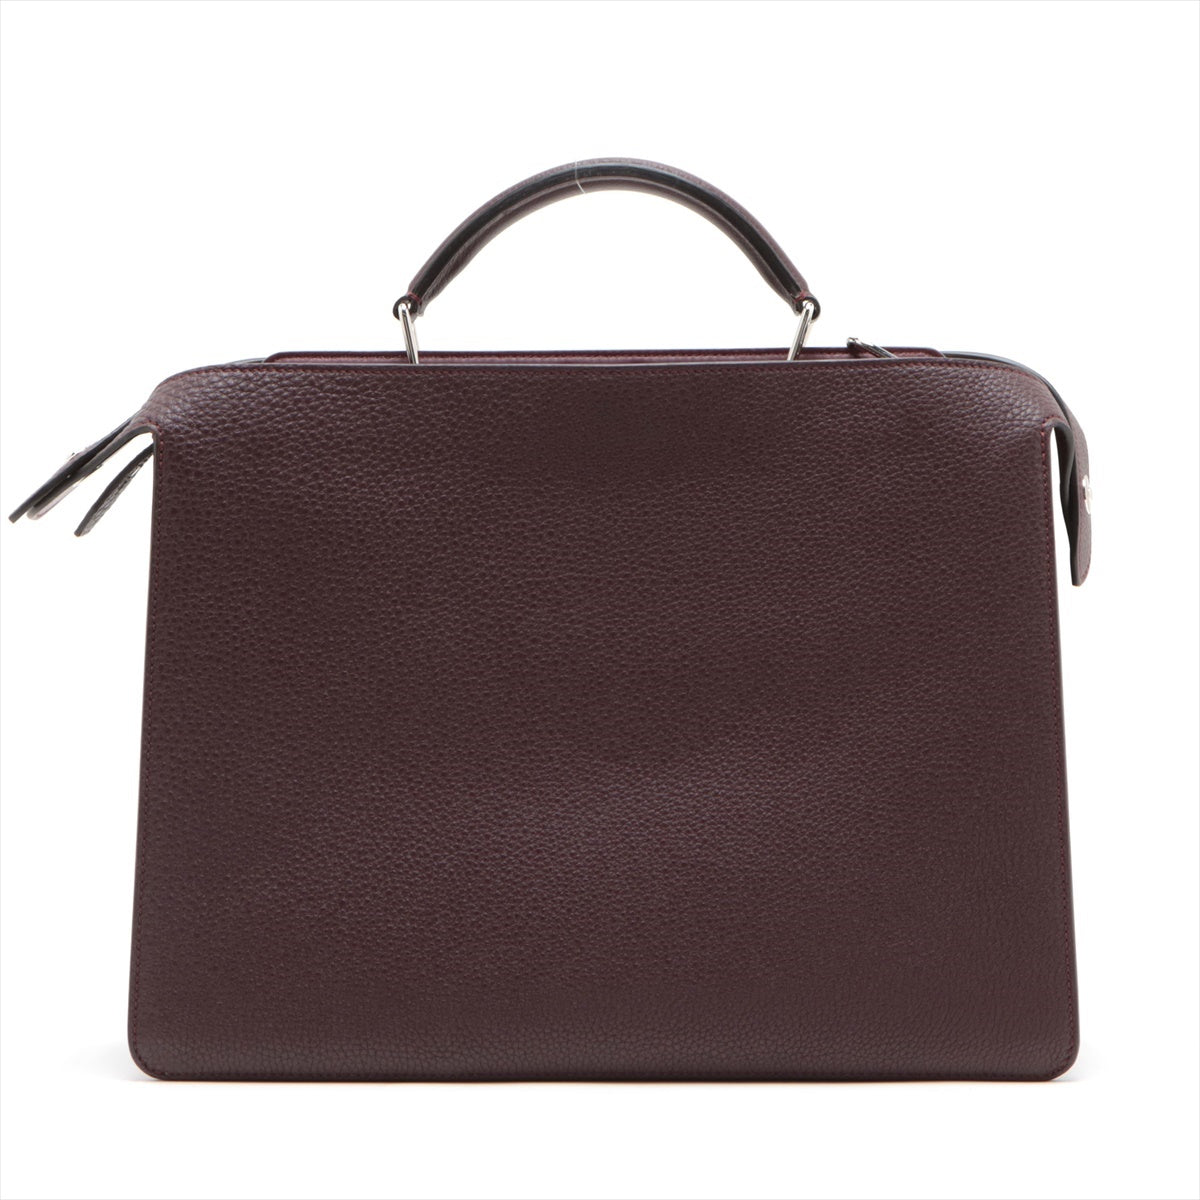 Fendi Peek-a-boo ICU Co., Ltd. midium Leather 2way handbag Wine red 7VA529